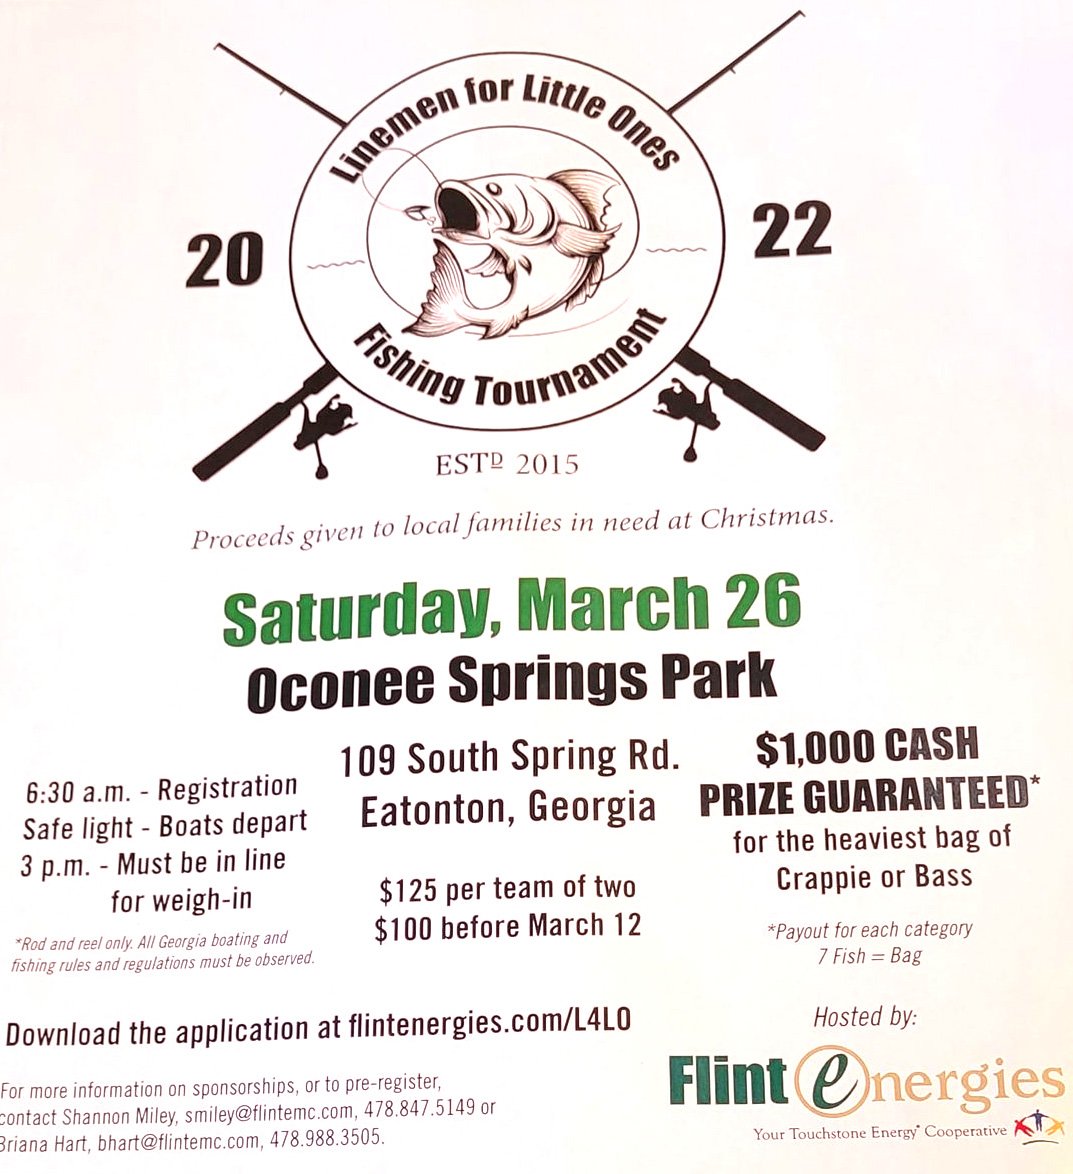 Linemen for Little Ones Fishing Tournament — Lake Oconee Life